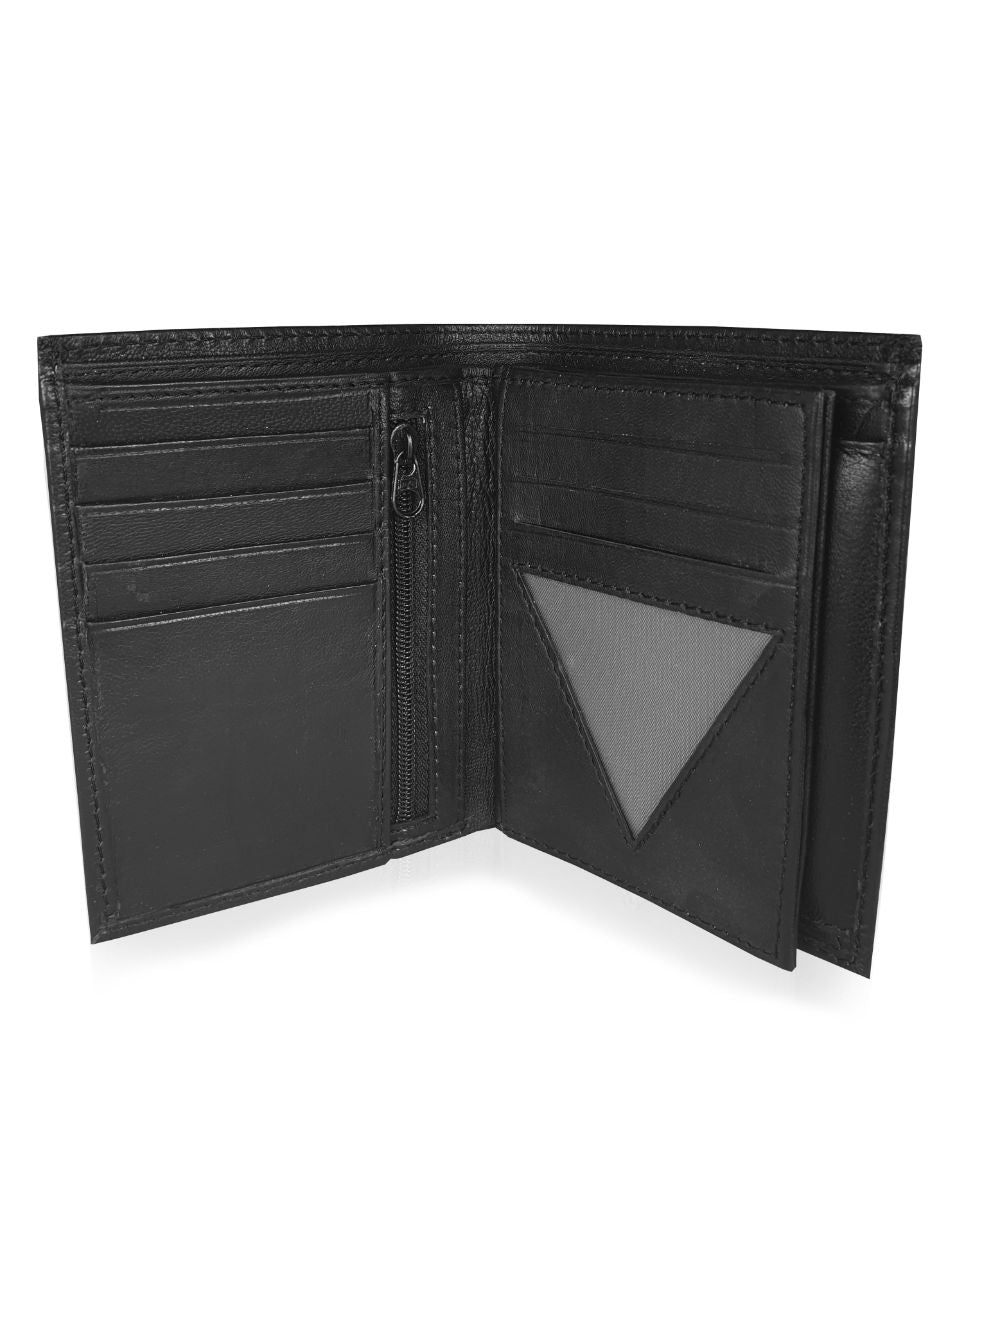 Roamlite Mens suit Wallet Black Leather RL23 open